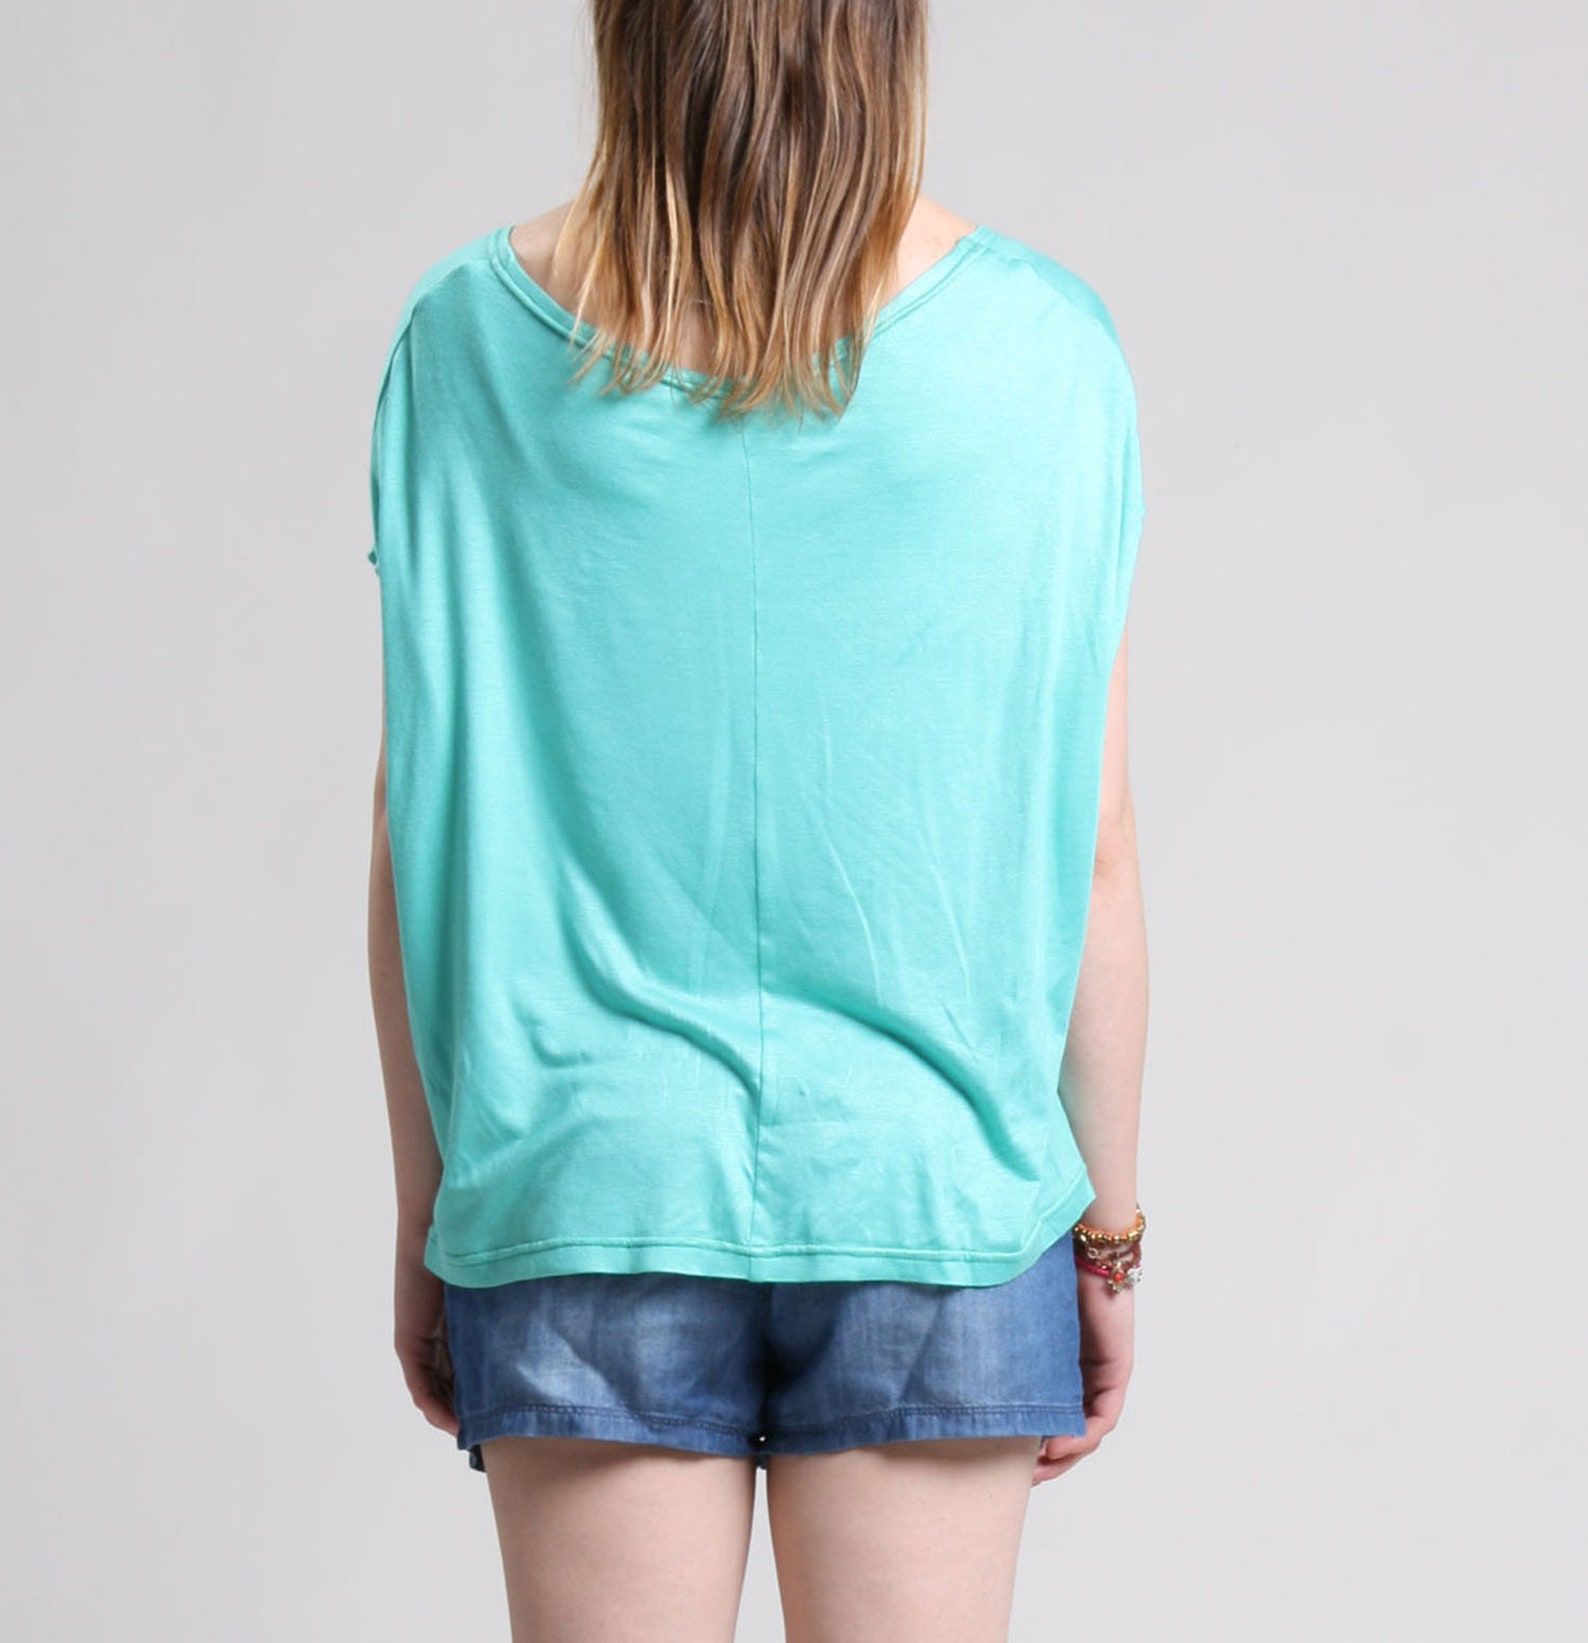 Summer Loose Top / Aqua Blue Short Sleeve Top / Blue T-shirt / | Etsy